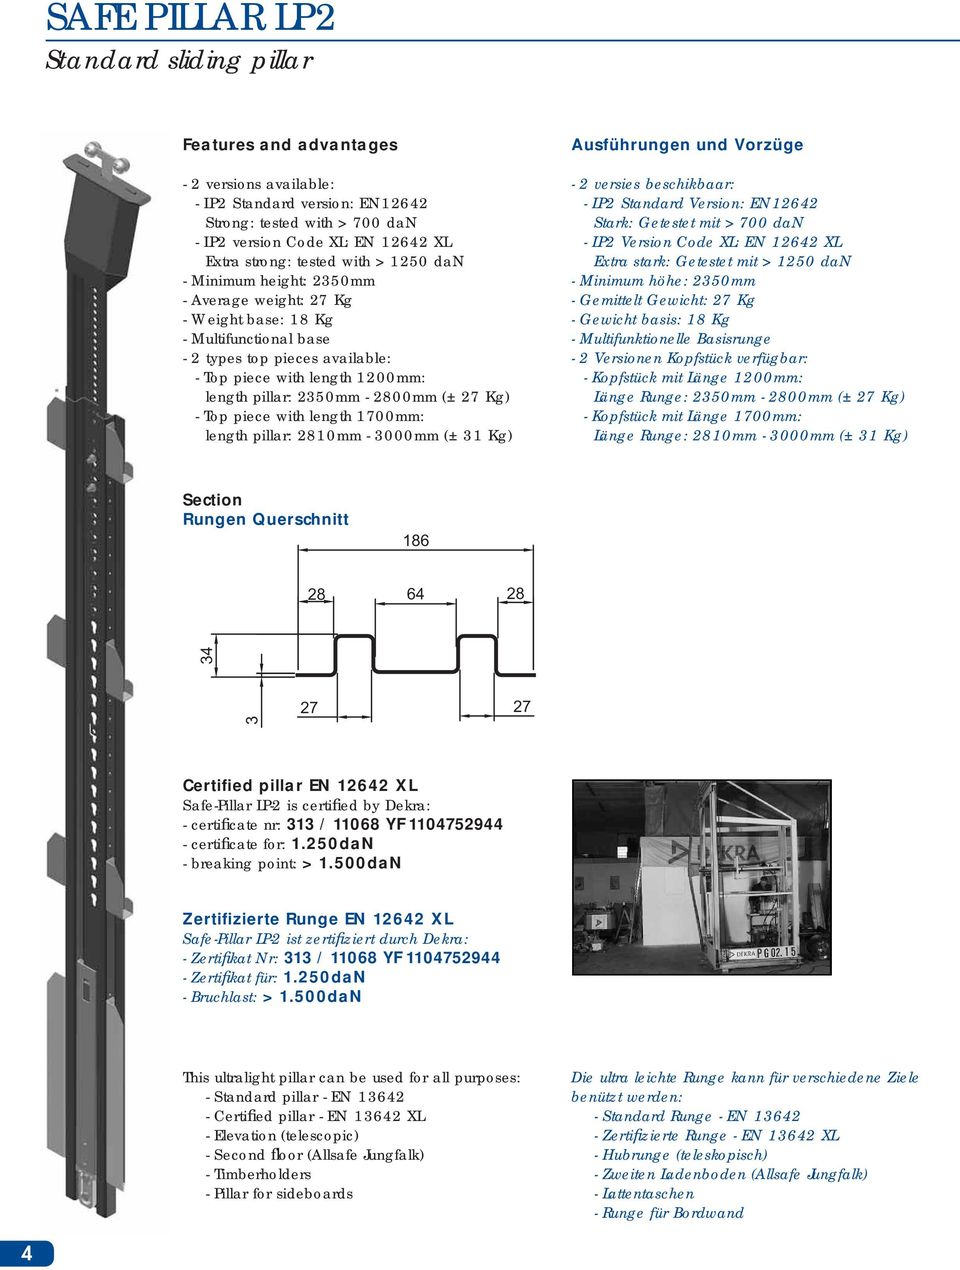 2350mm - 2800mm (± 27 Kg) - Top piece with length 1700mm: length pillar: 2810mm - 3000mm (± 31 Kg) Ausführungen und Vorzüge - 2 versies beschikbaar: - LP2 Standard Version: EN12642 Stark: Getestet